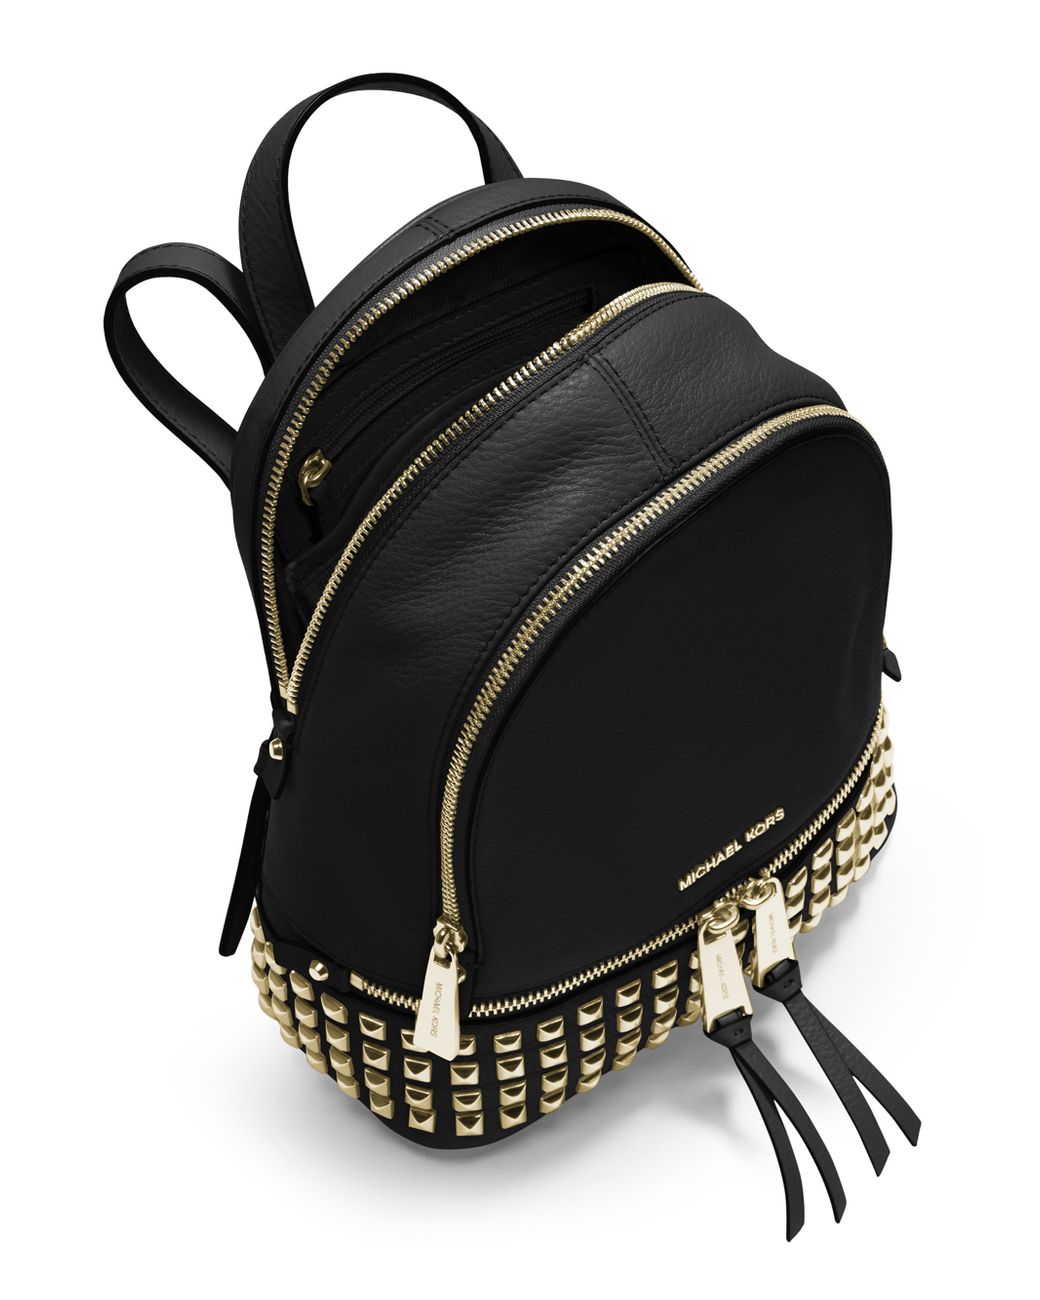 MICHAEL KORS: Rhea Zip Michael leather backpack - Black